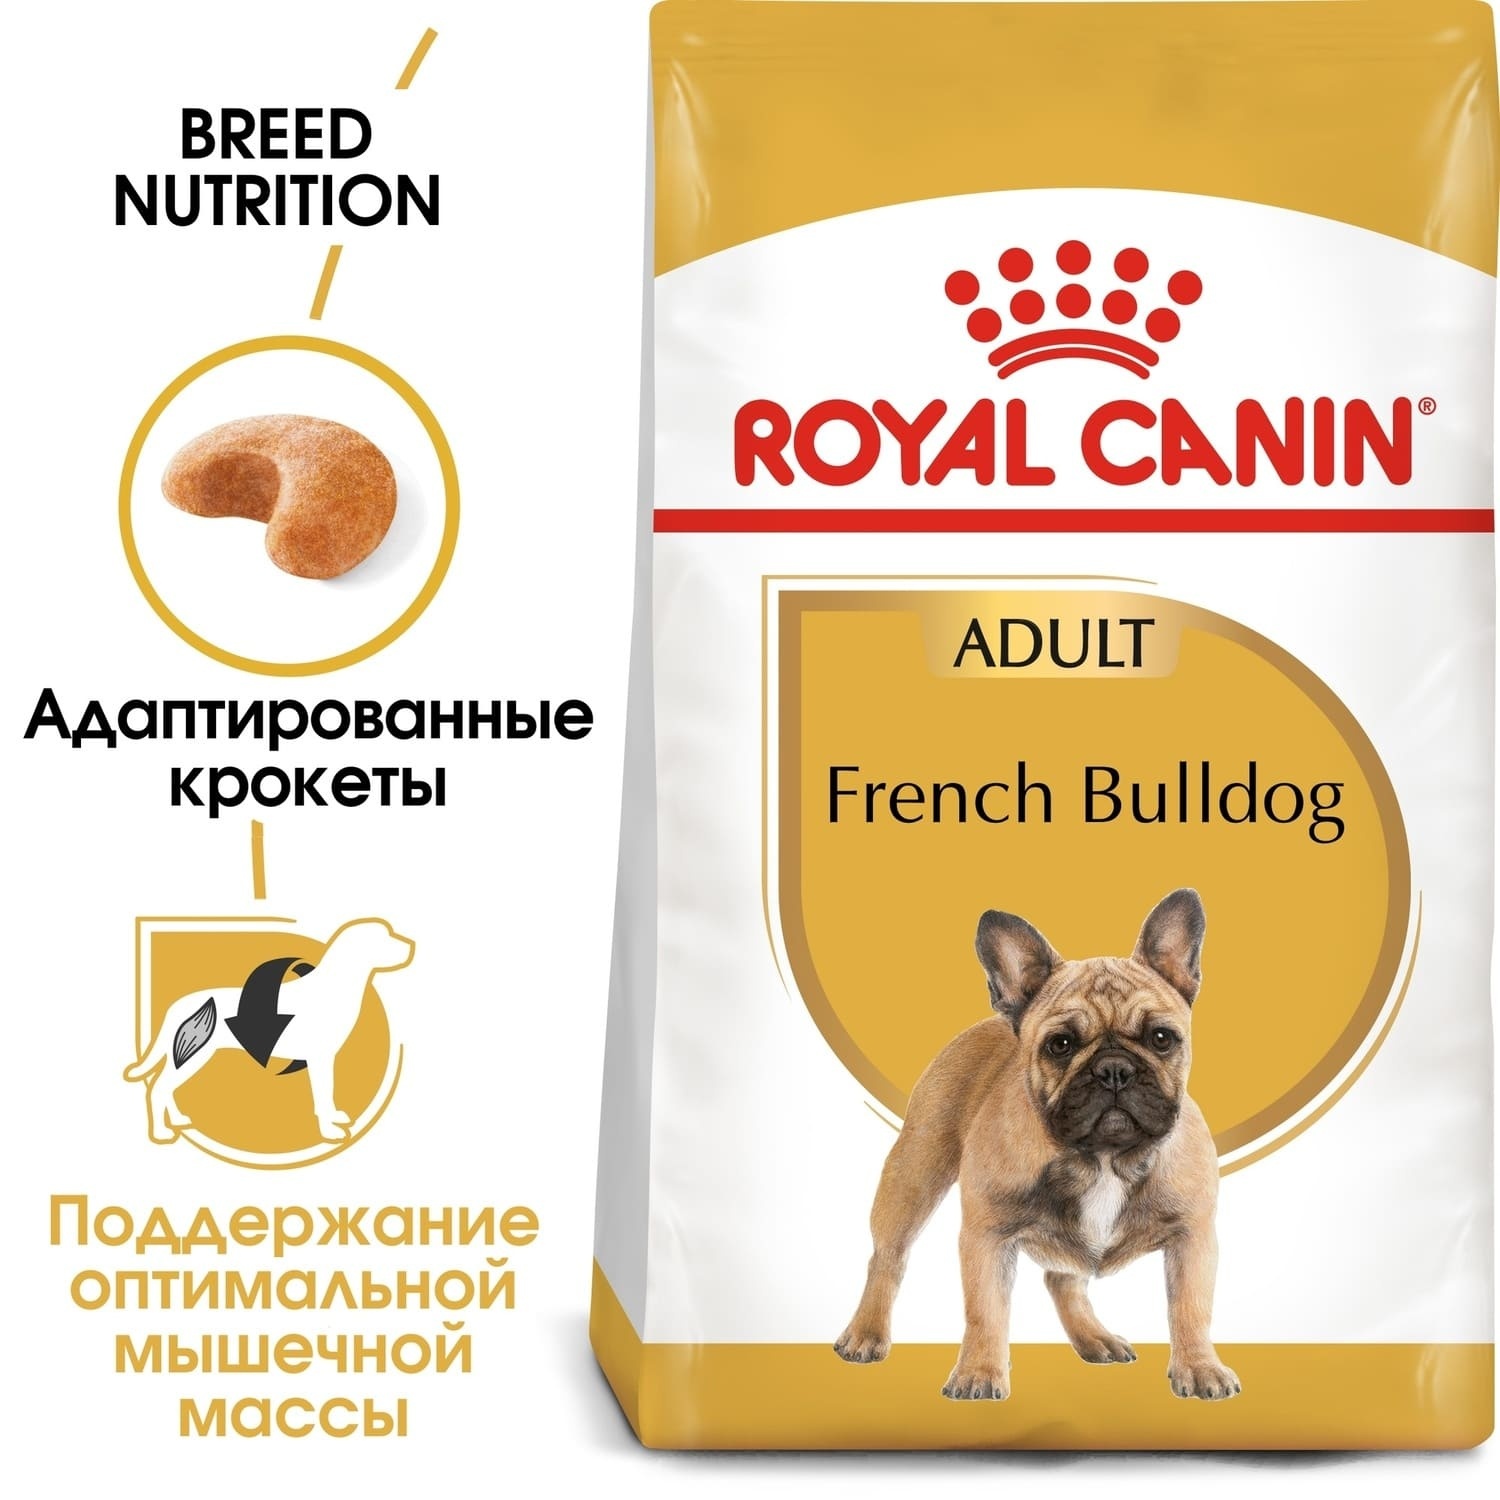 Для взрослого французского бульдога с 12 мес. (3 кг) Royal Canin (сухие корма) Для взрослого французского бульдога с 12 мес. (3 кг) - фото 2